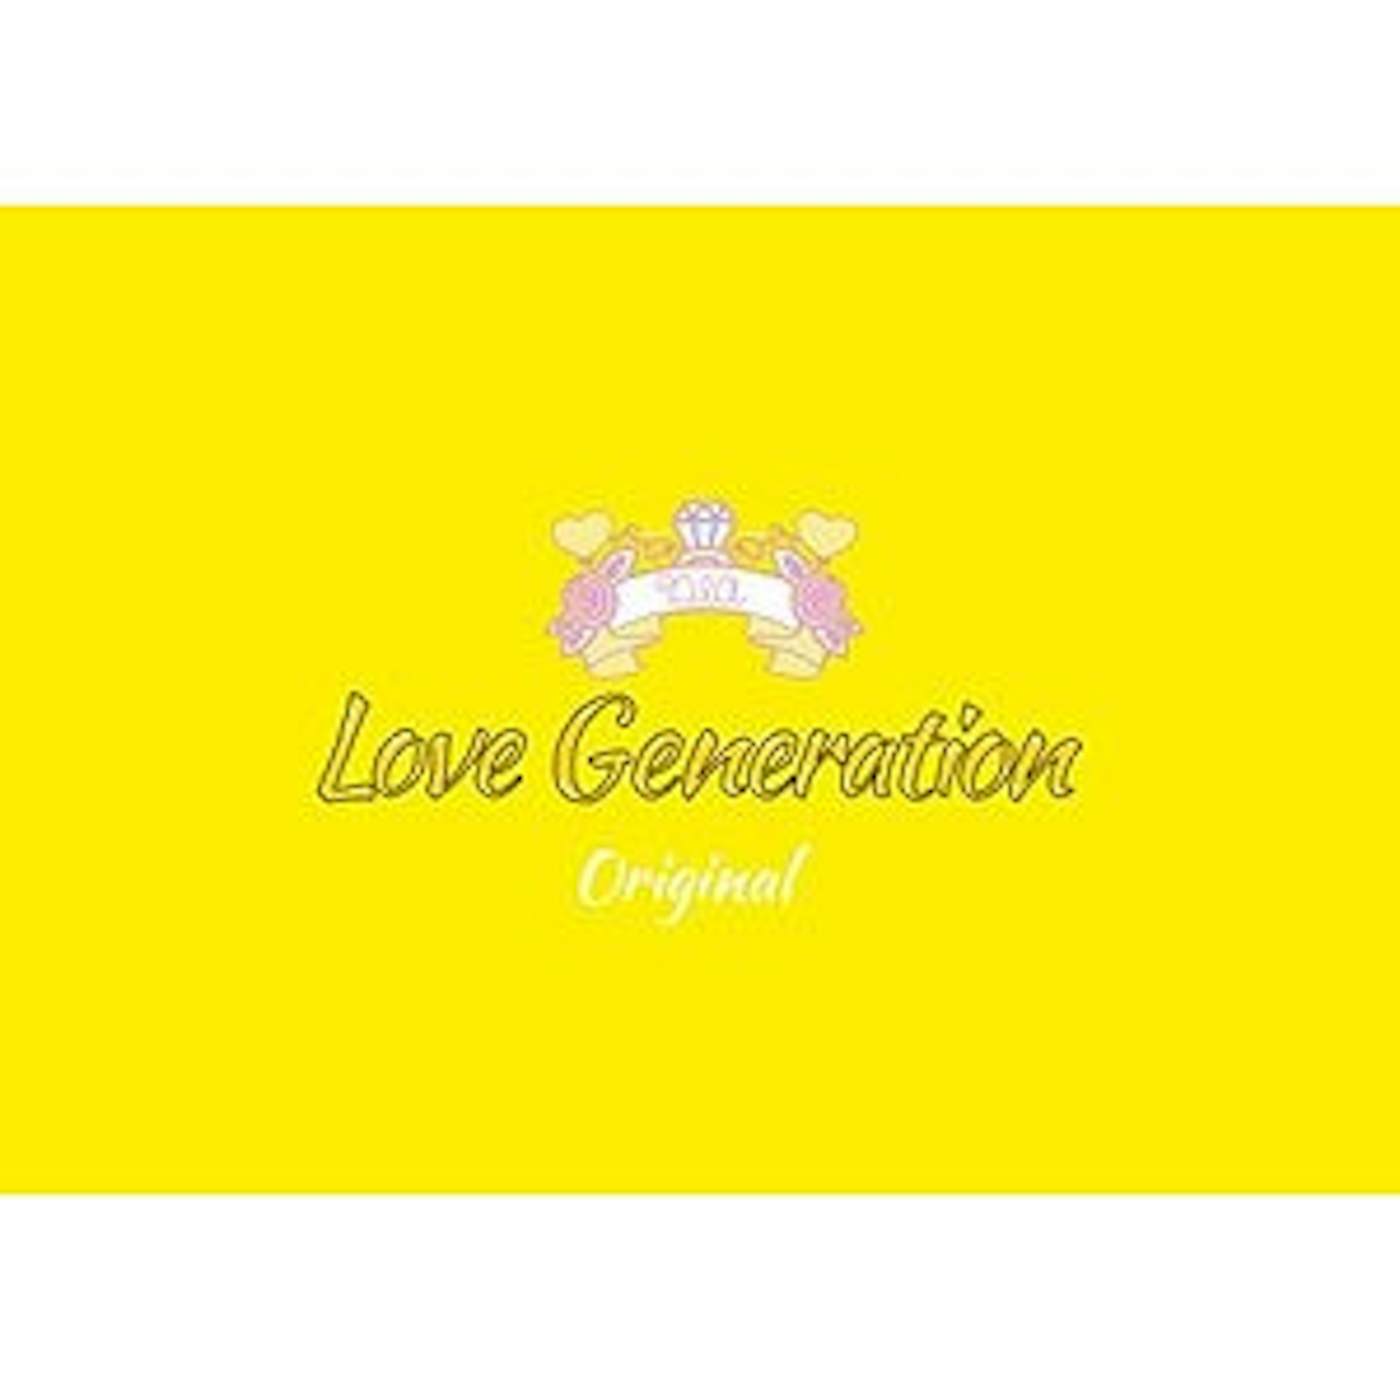 Dia LOVE GENERATION CD